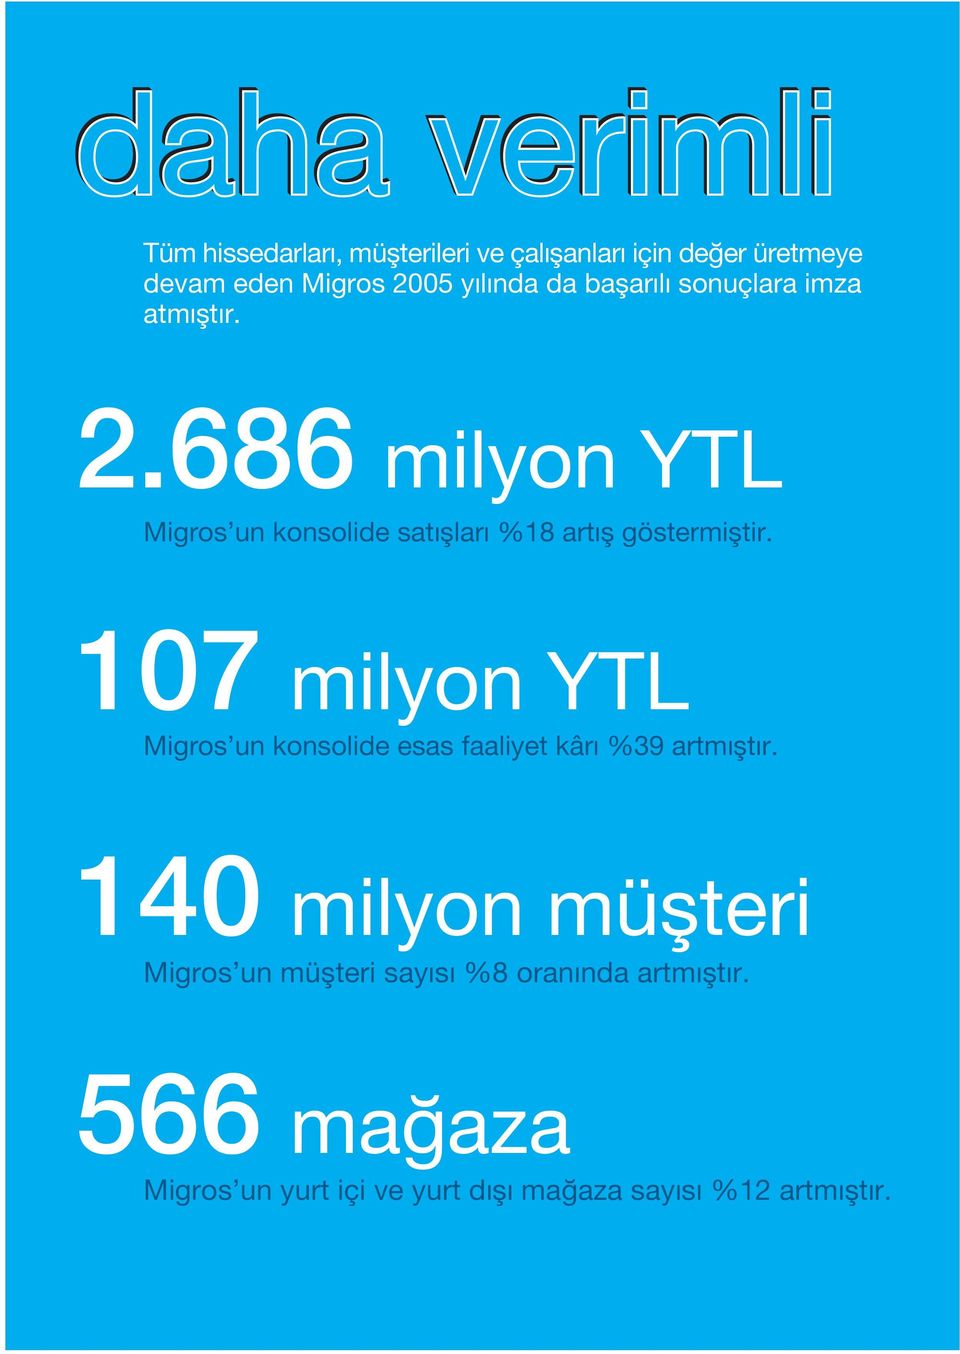 686 milyon YTL Migros un konsolide sat fllar %18 art fl göstermifltir.